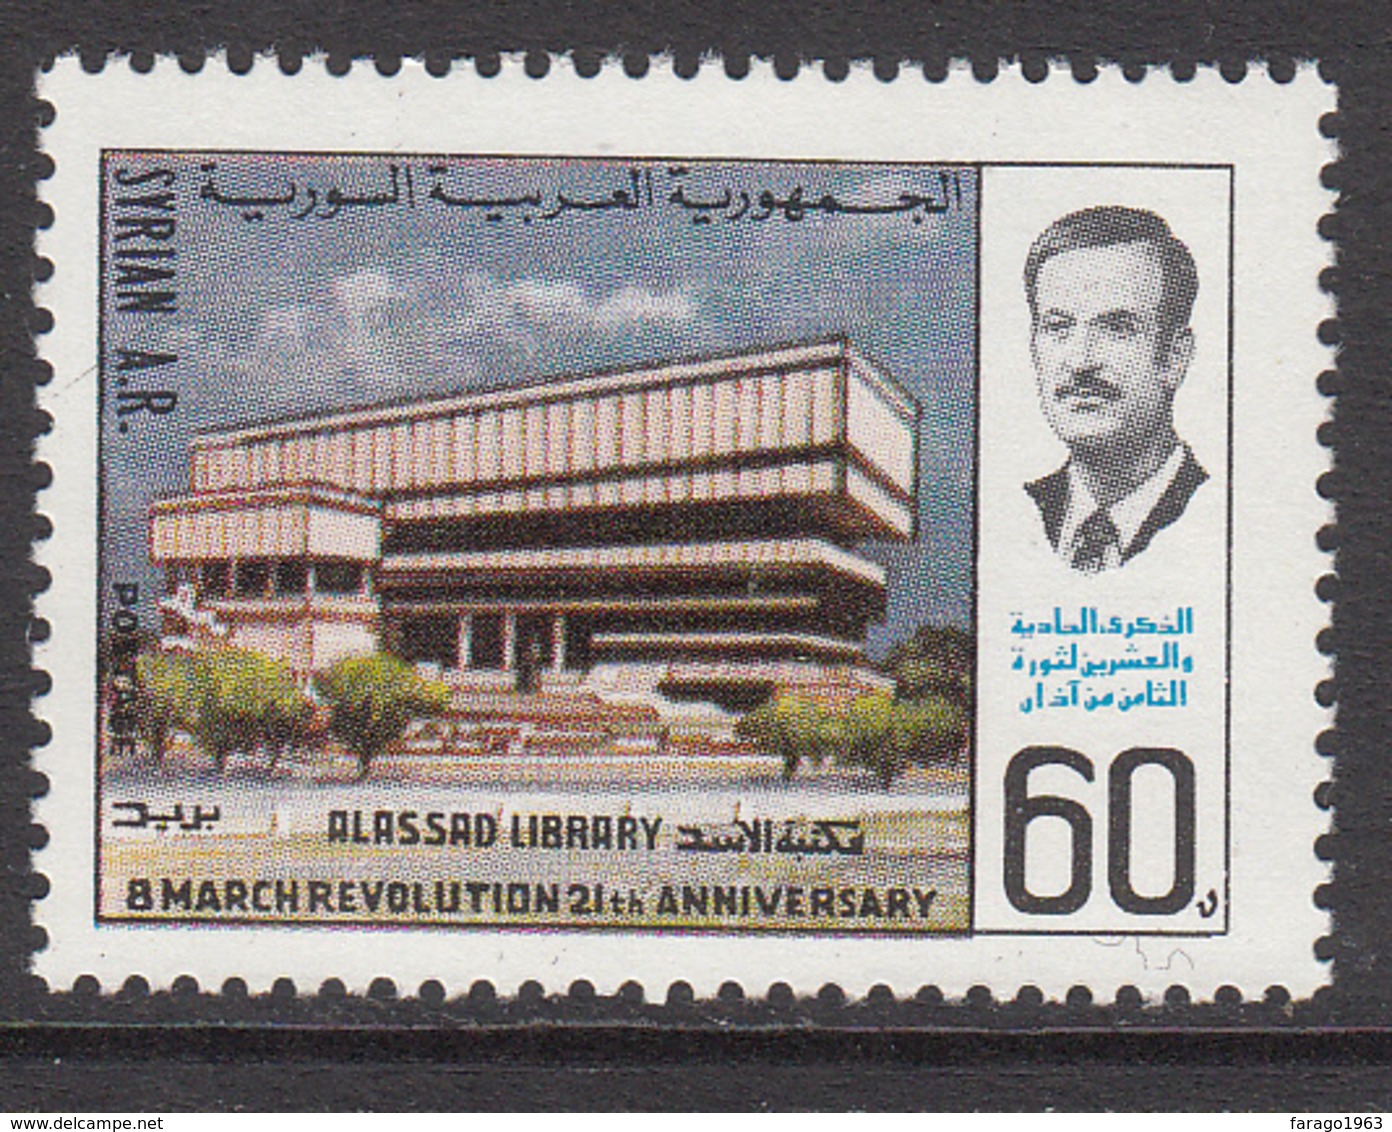 1984 Syria Anniv Of Revolution Alassad Library Set Of 1 MNH - Siria